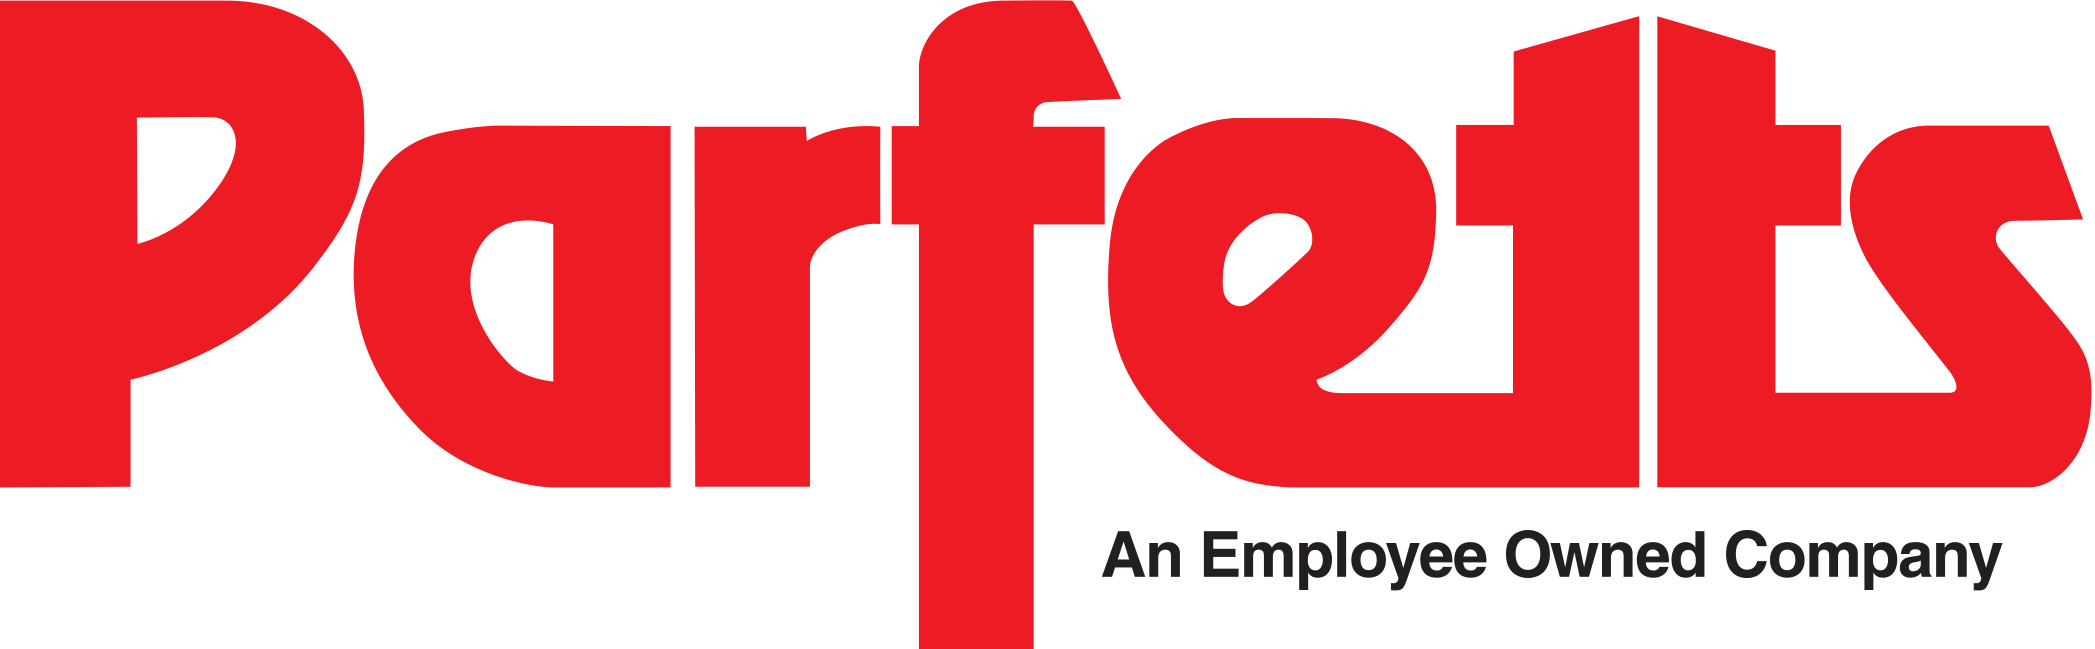 Parfetts Logo